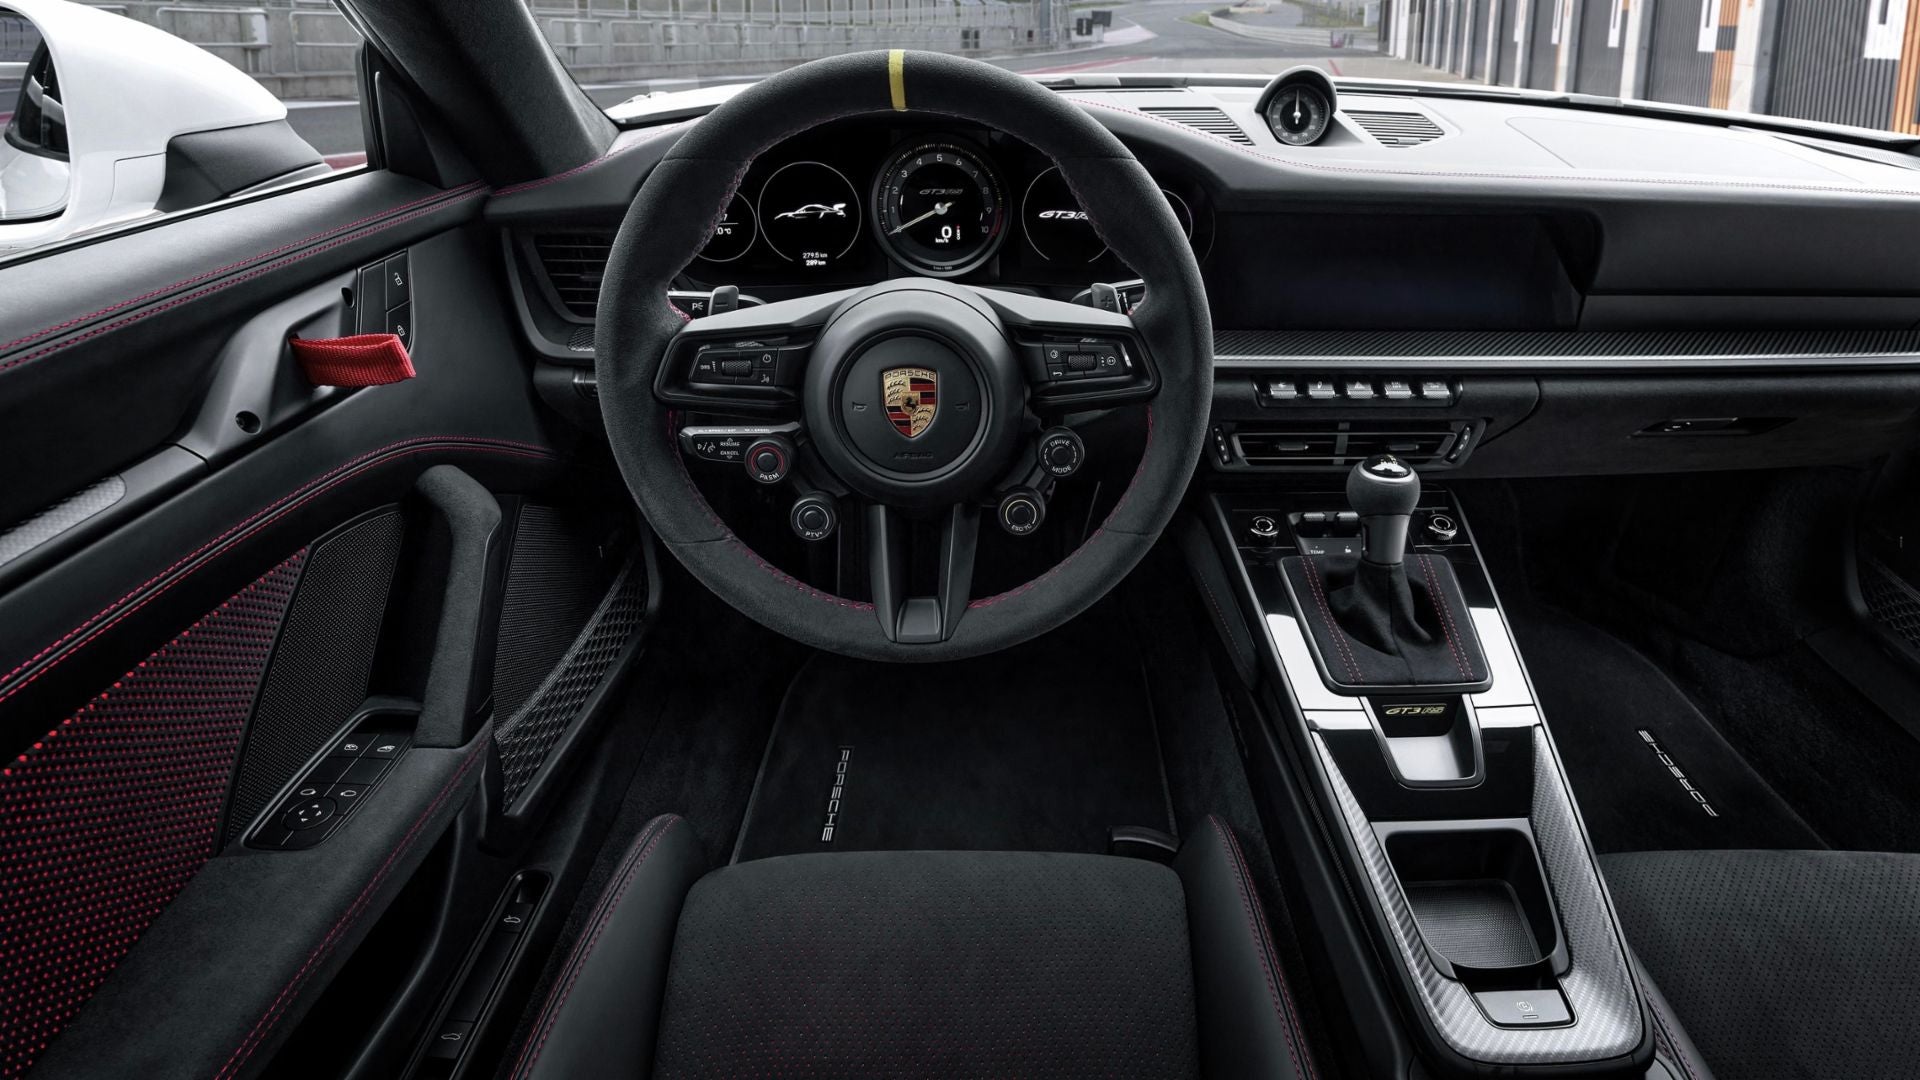 Porsche 911 price in India, 911 ST, GT3 RS, exterior, interior, performance